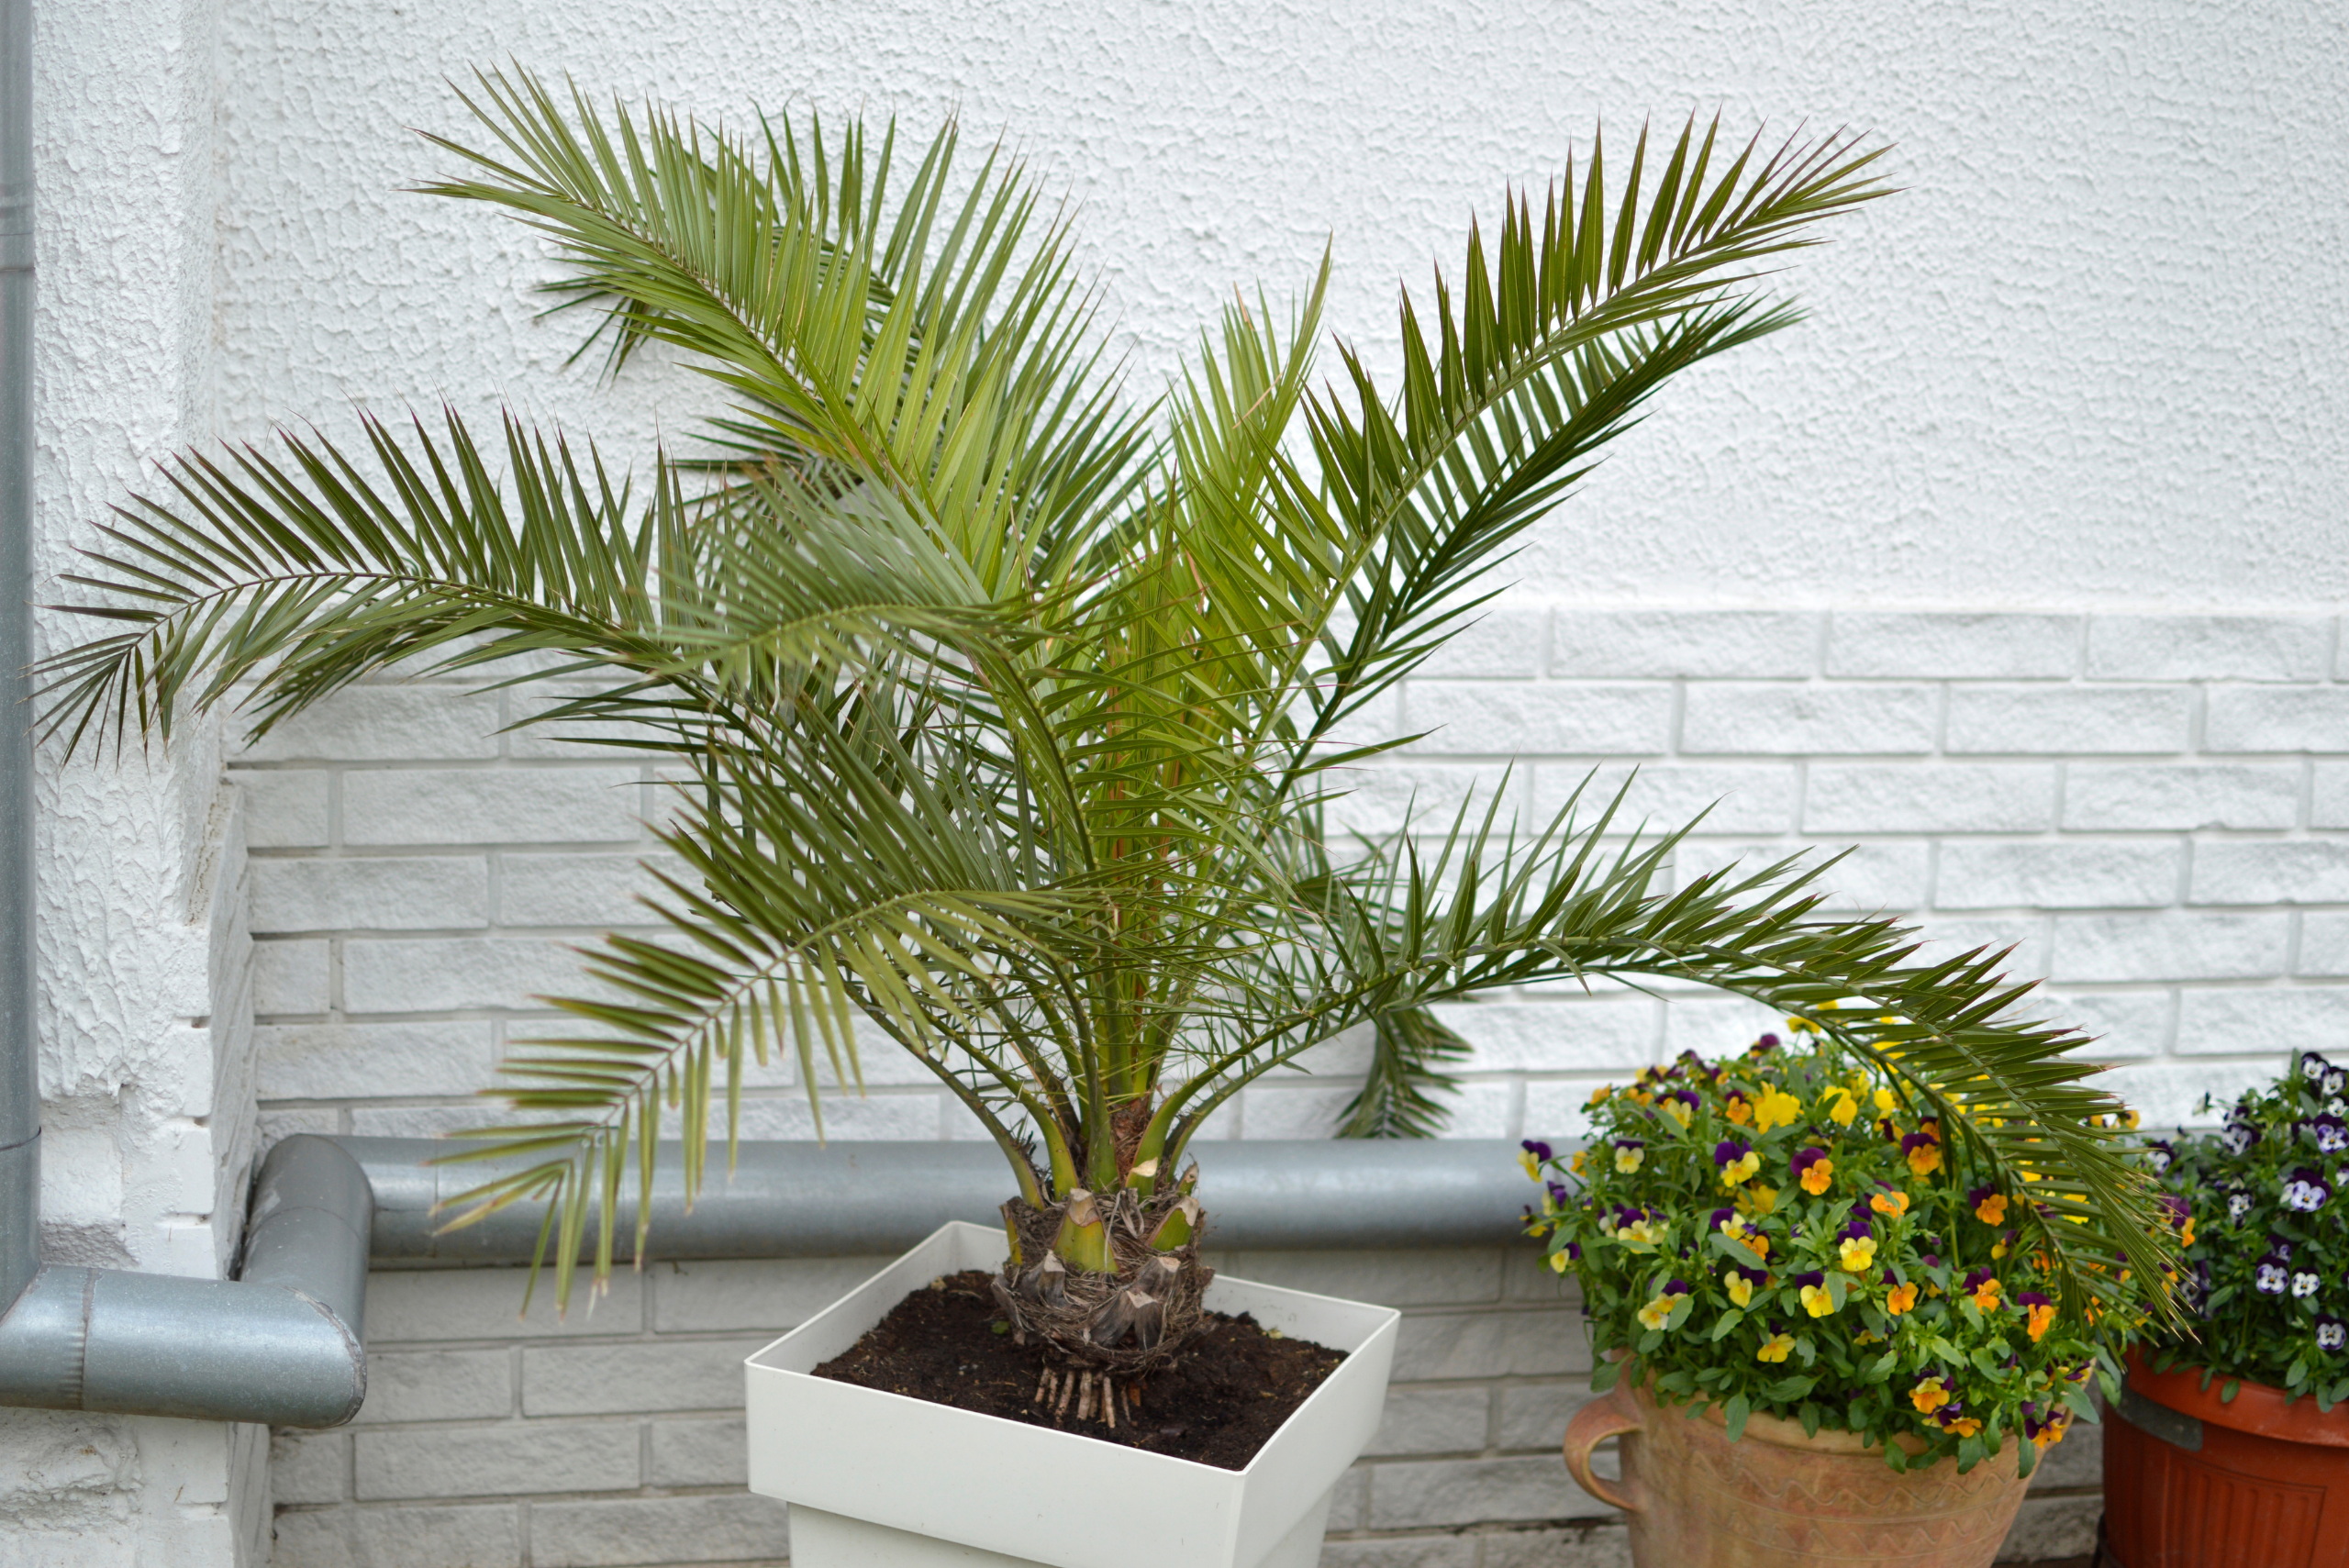 Majesty Palm in a white pot.